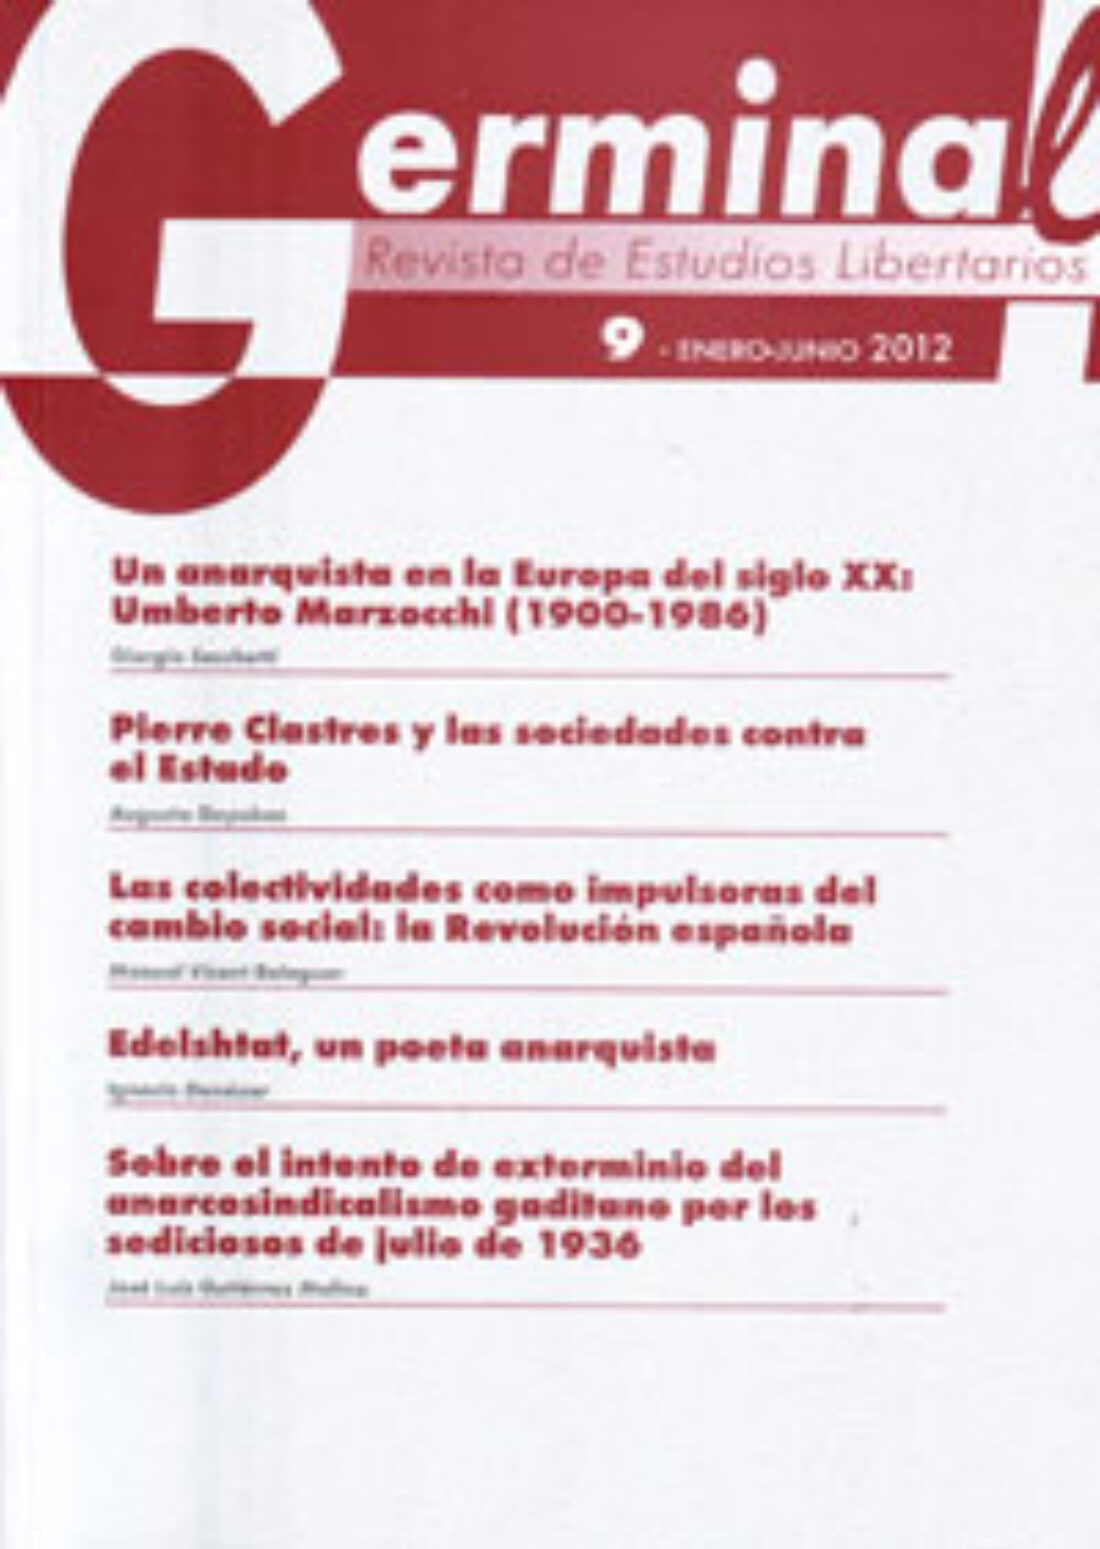 Madrid: Charla-presentación de Germinal nº9 – Revista de estudios libertarios